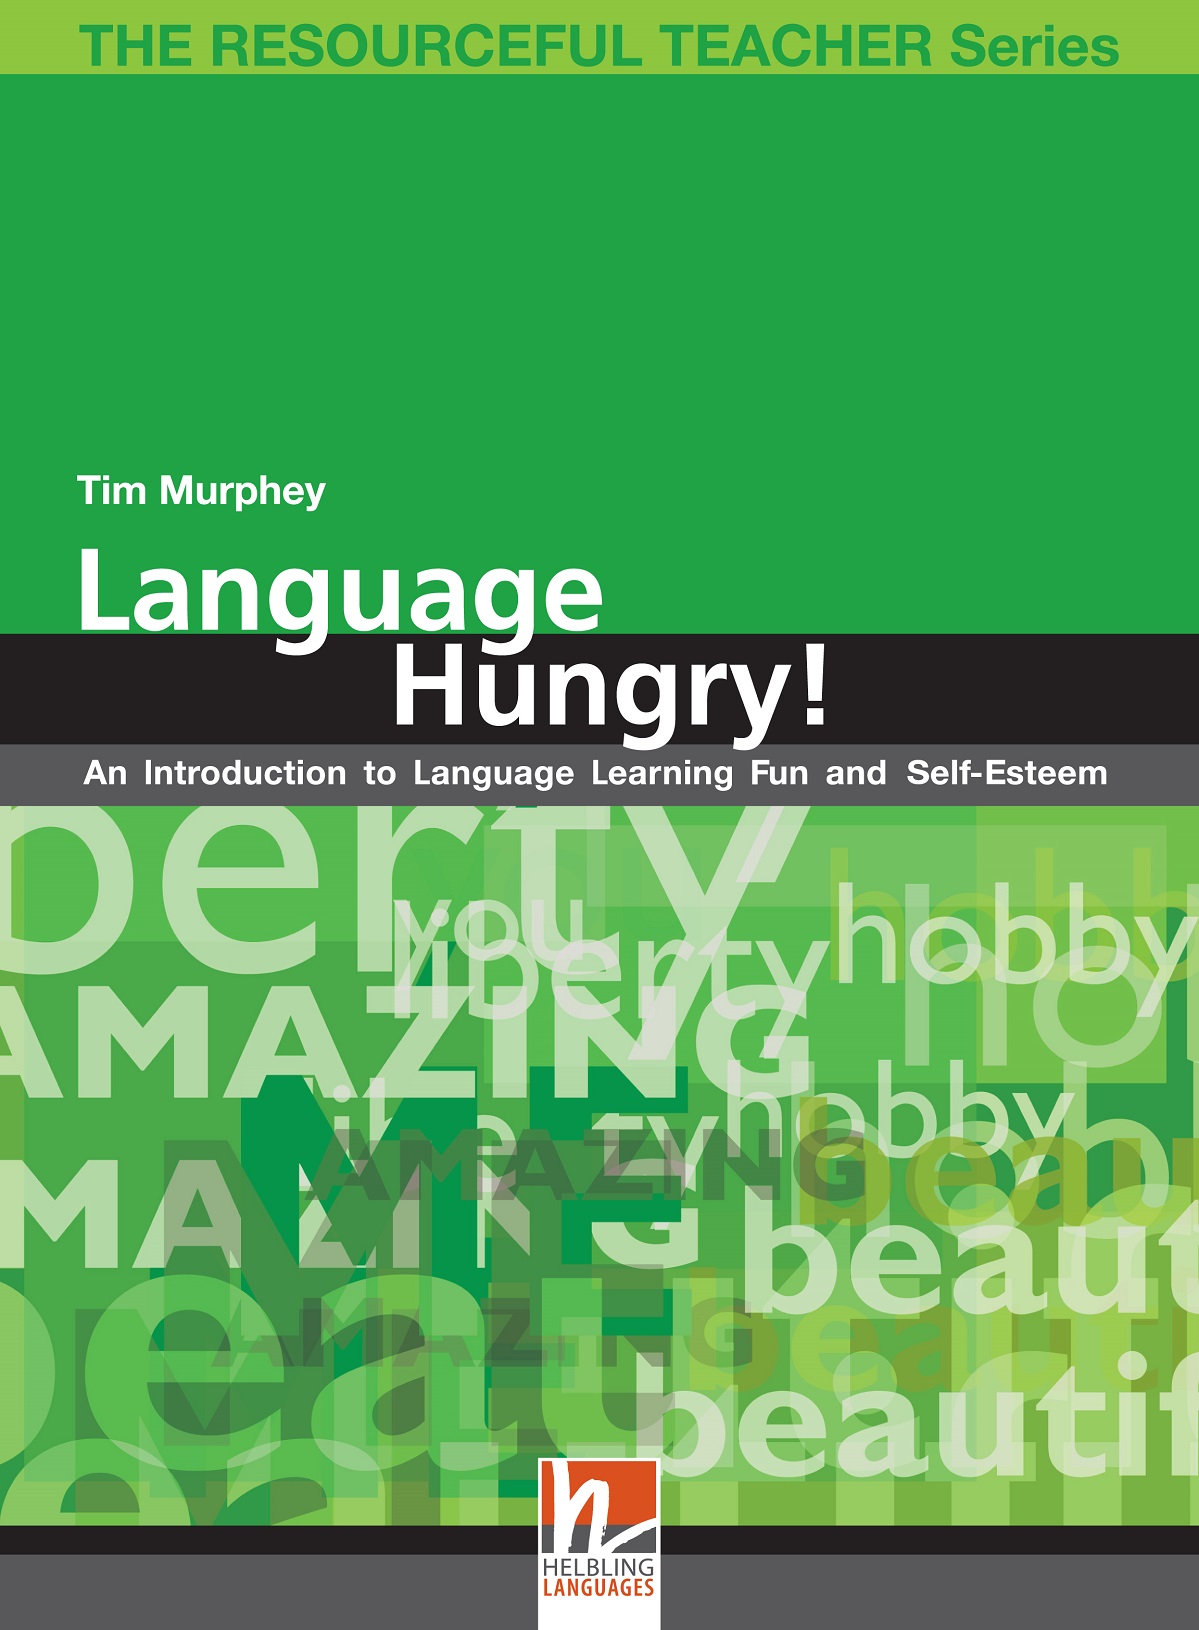 Hungry teacher. Murphey t. "language hungry".